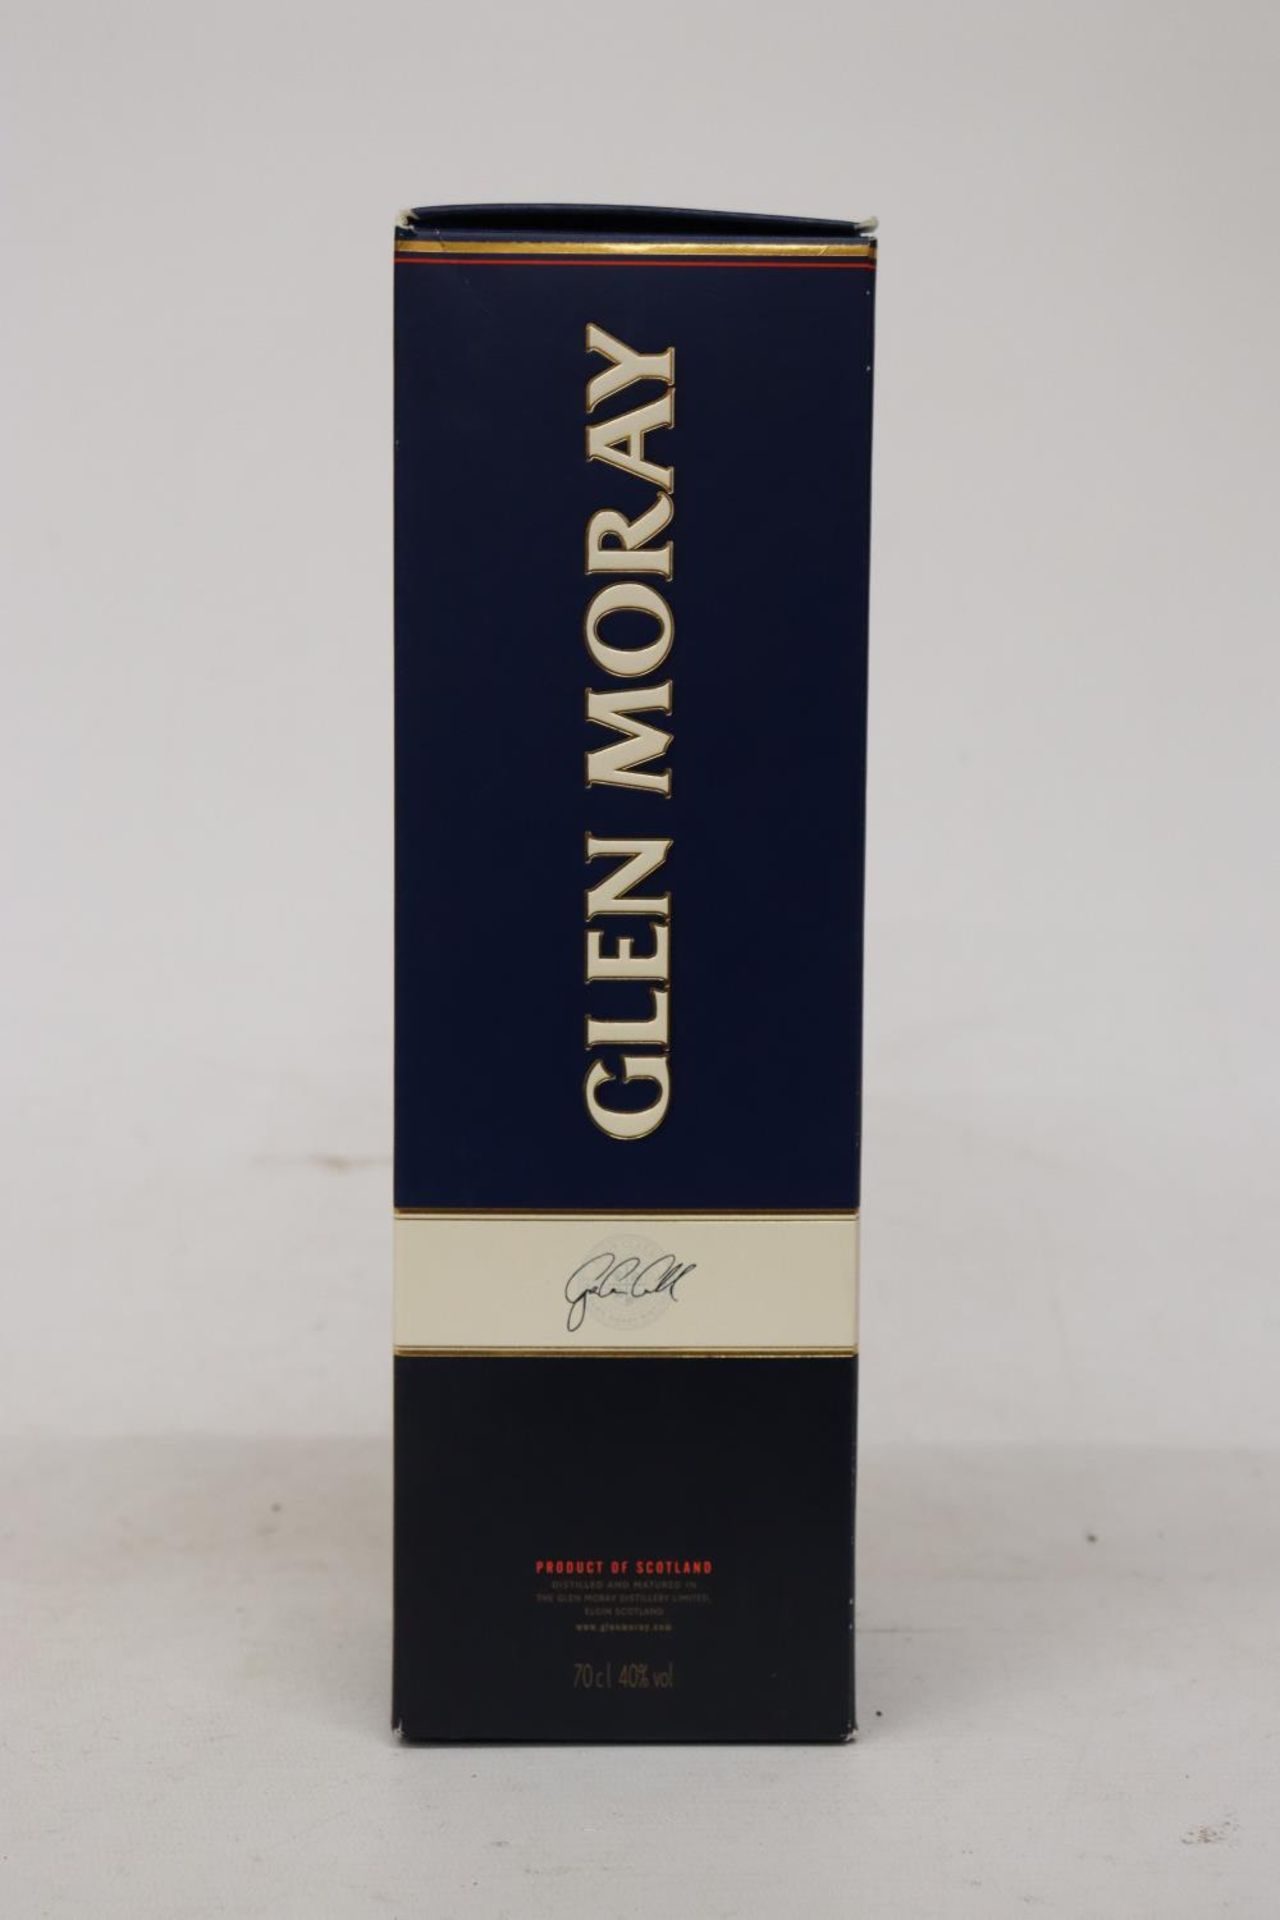 A BOTTLE OF GLEN MORAY SPEYSIDE ELGIN CLASSIC WHISKY, BOXED - Image 7 of 7